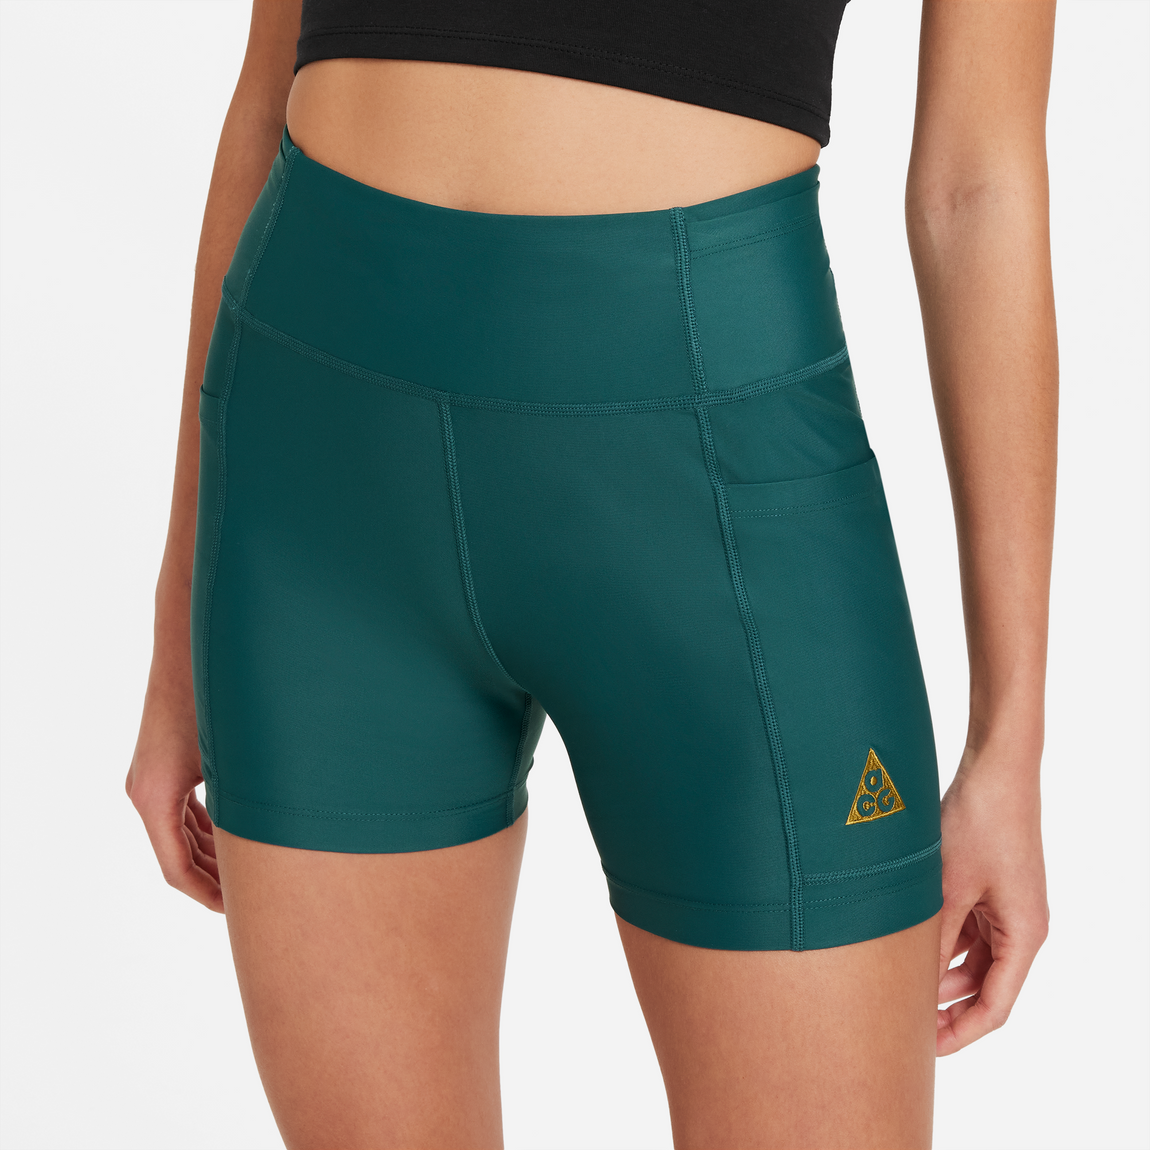 Nike Women's ACG Dri-Fit CraterLookout Shorts (Dark Teal Green/Peat Moss) - Nike Women's ACG Dri-Fit CraterLookout Shorts (Dark Teal Green/Peat Moss) - 